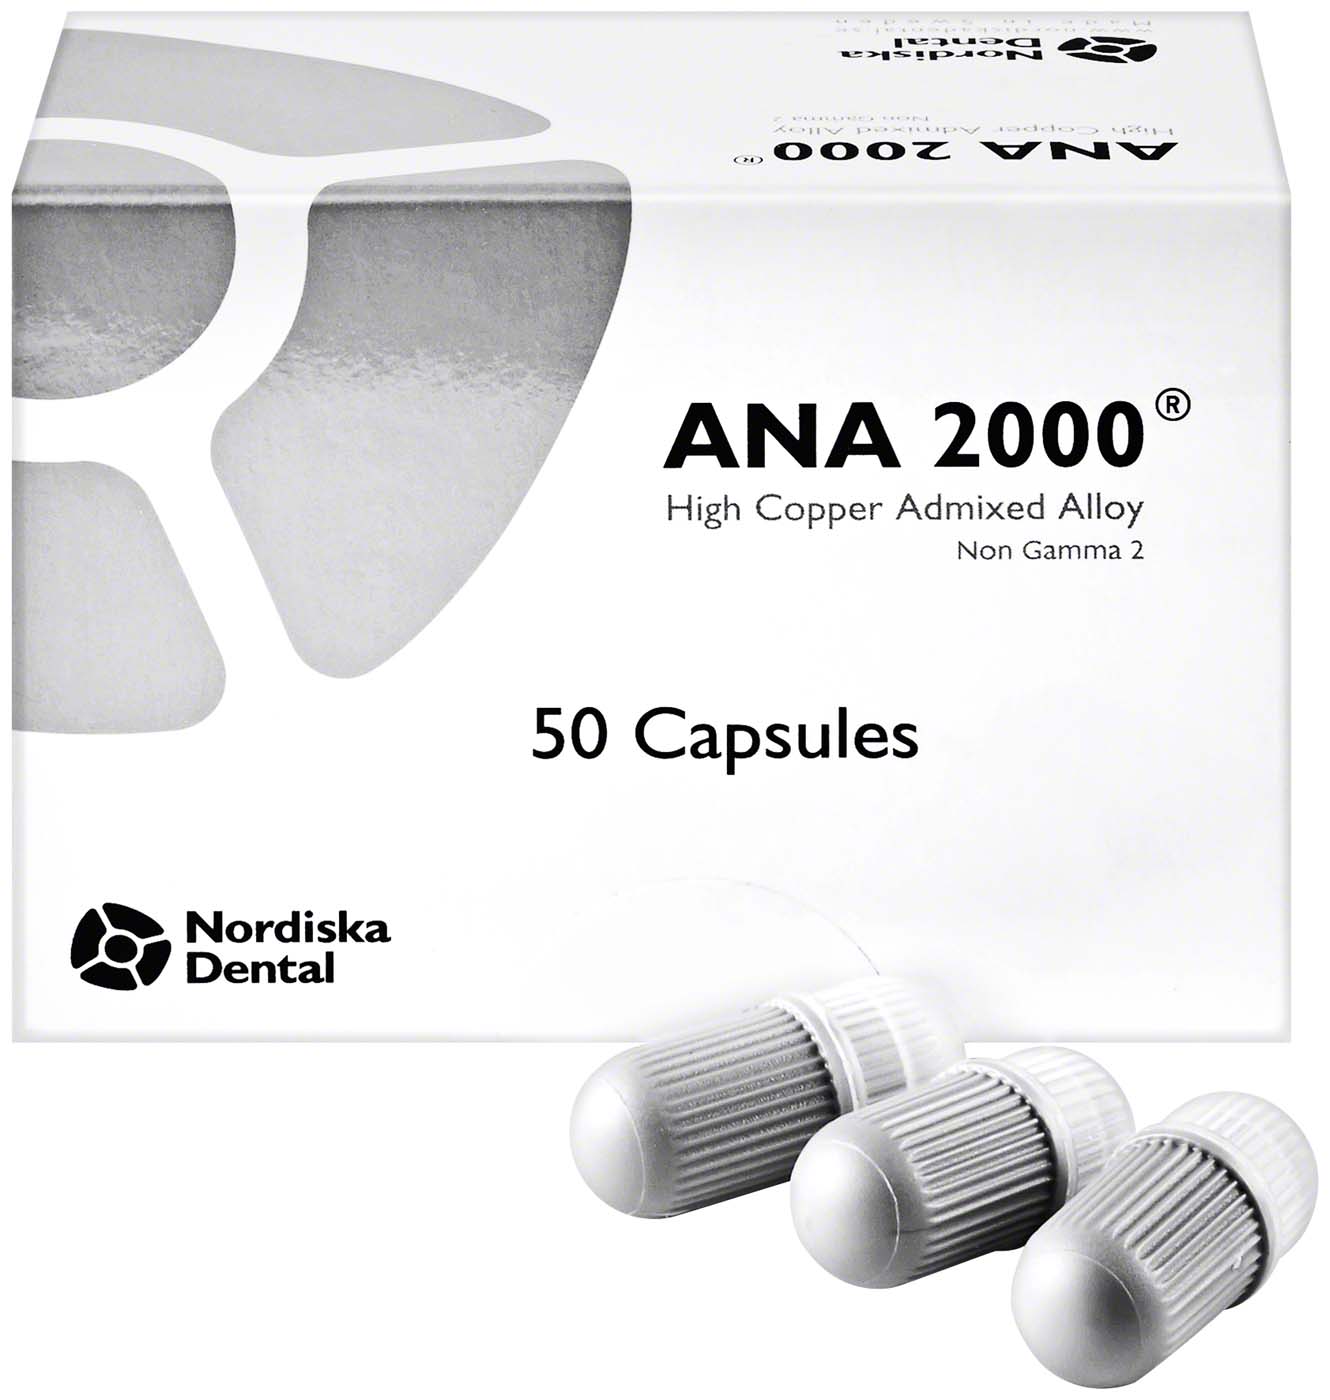 ANA 2000® Nordiska Dental